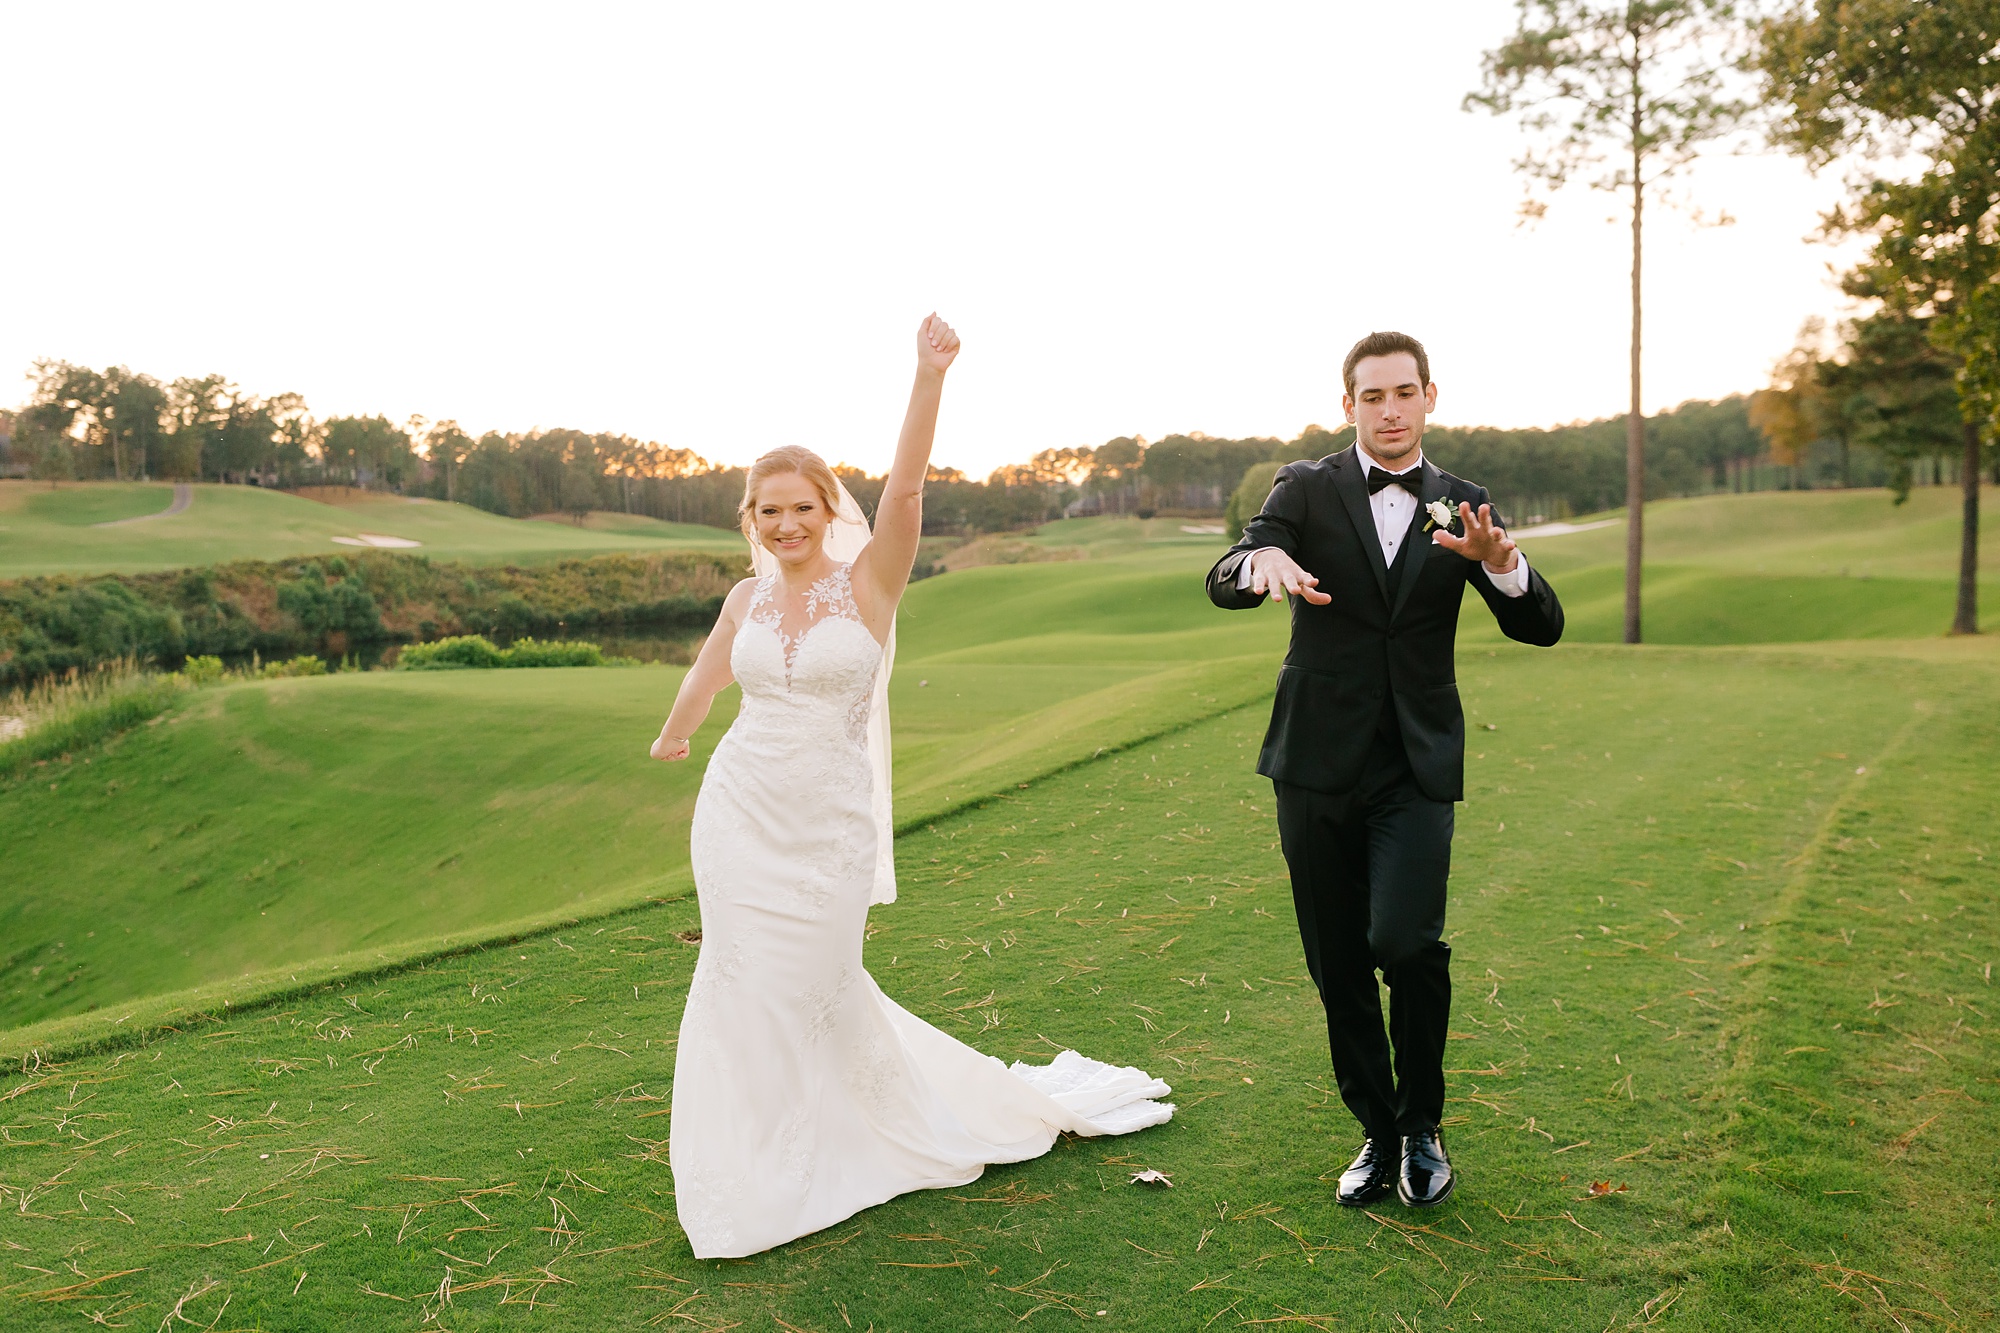 newlyweds cheer during wedding photos in Alabama